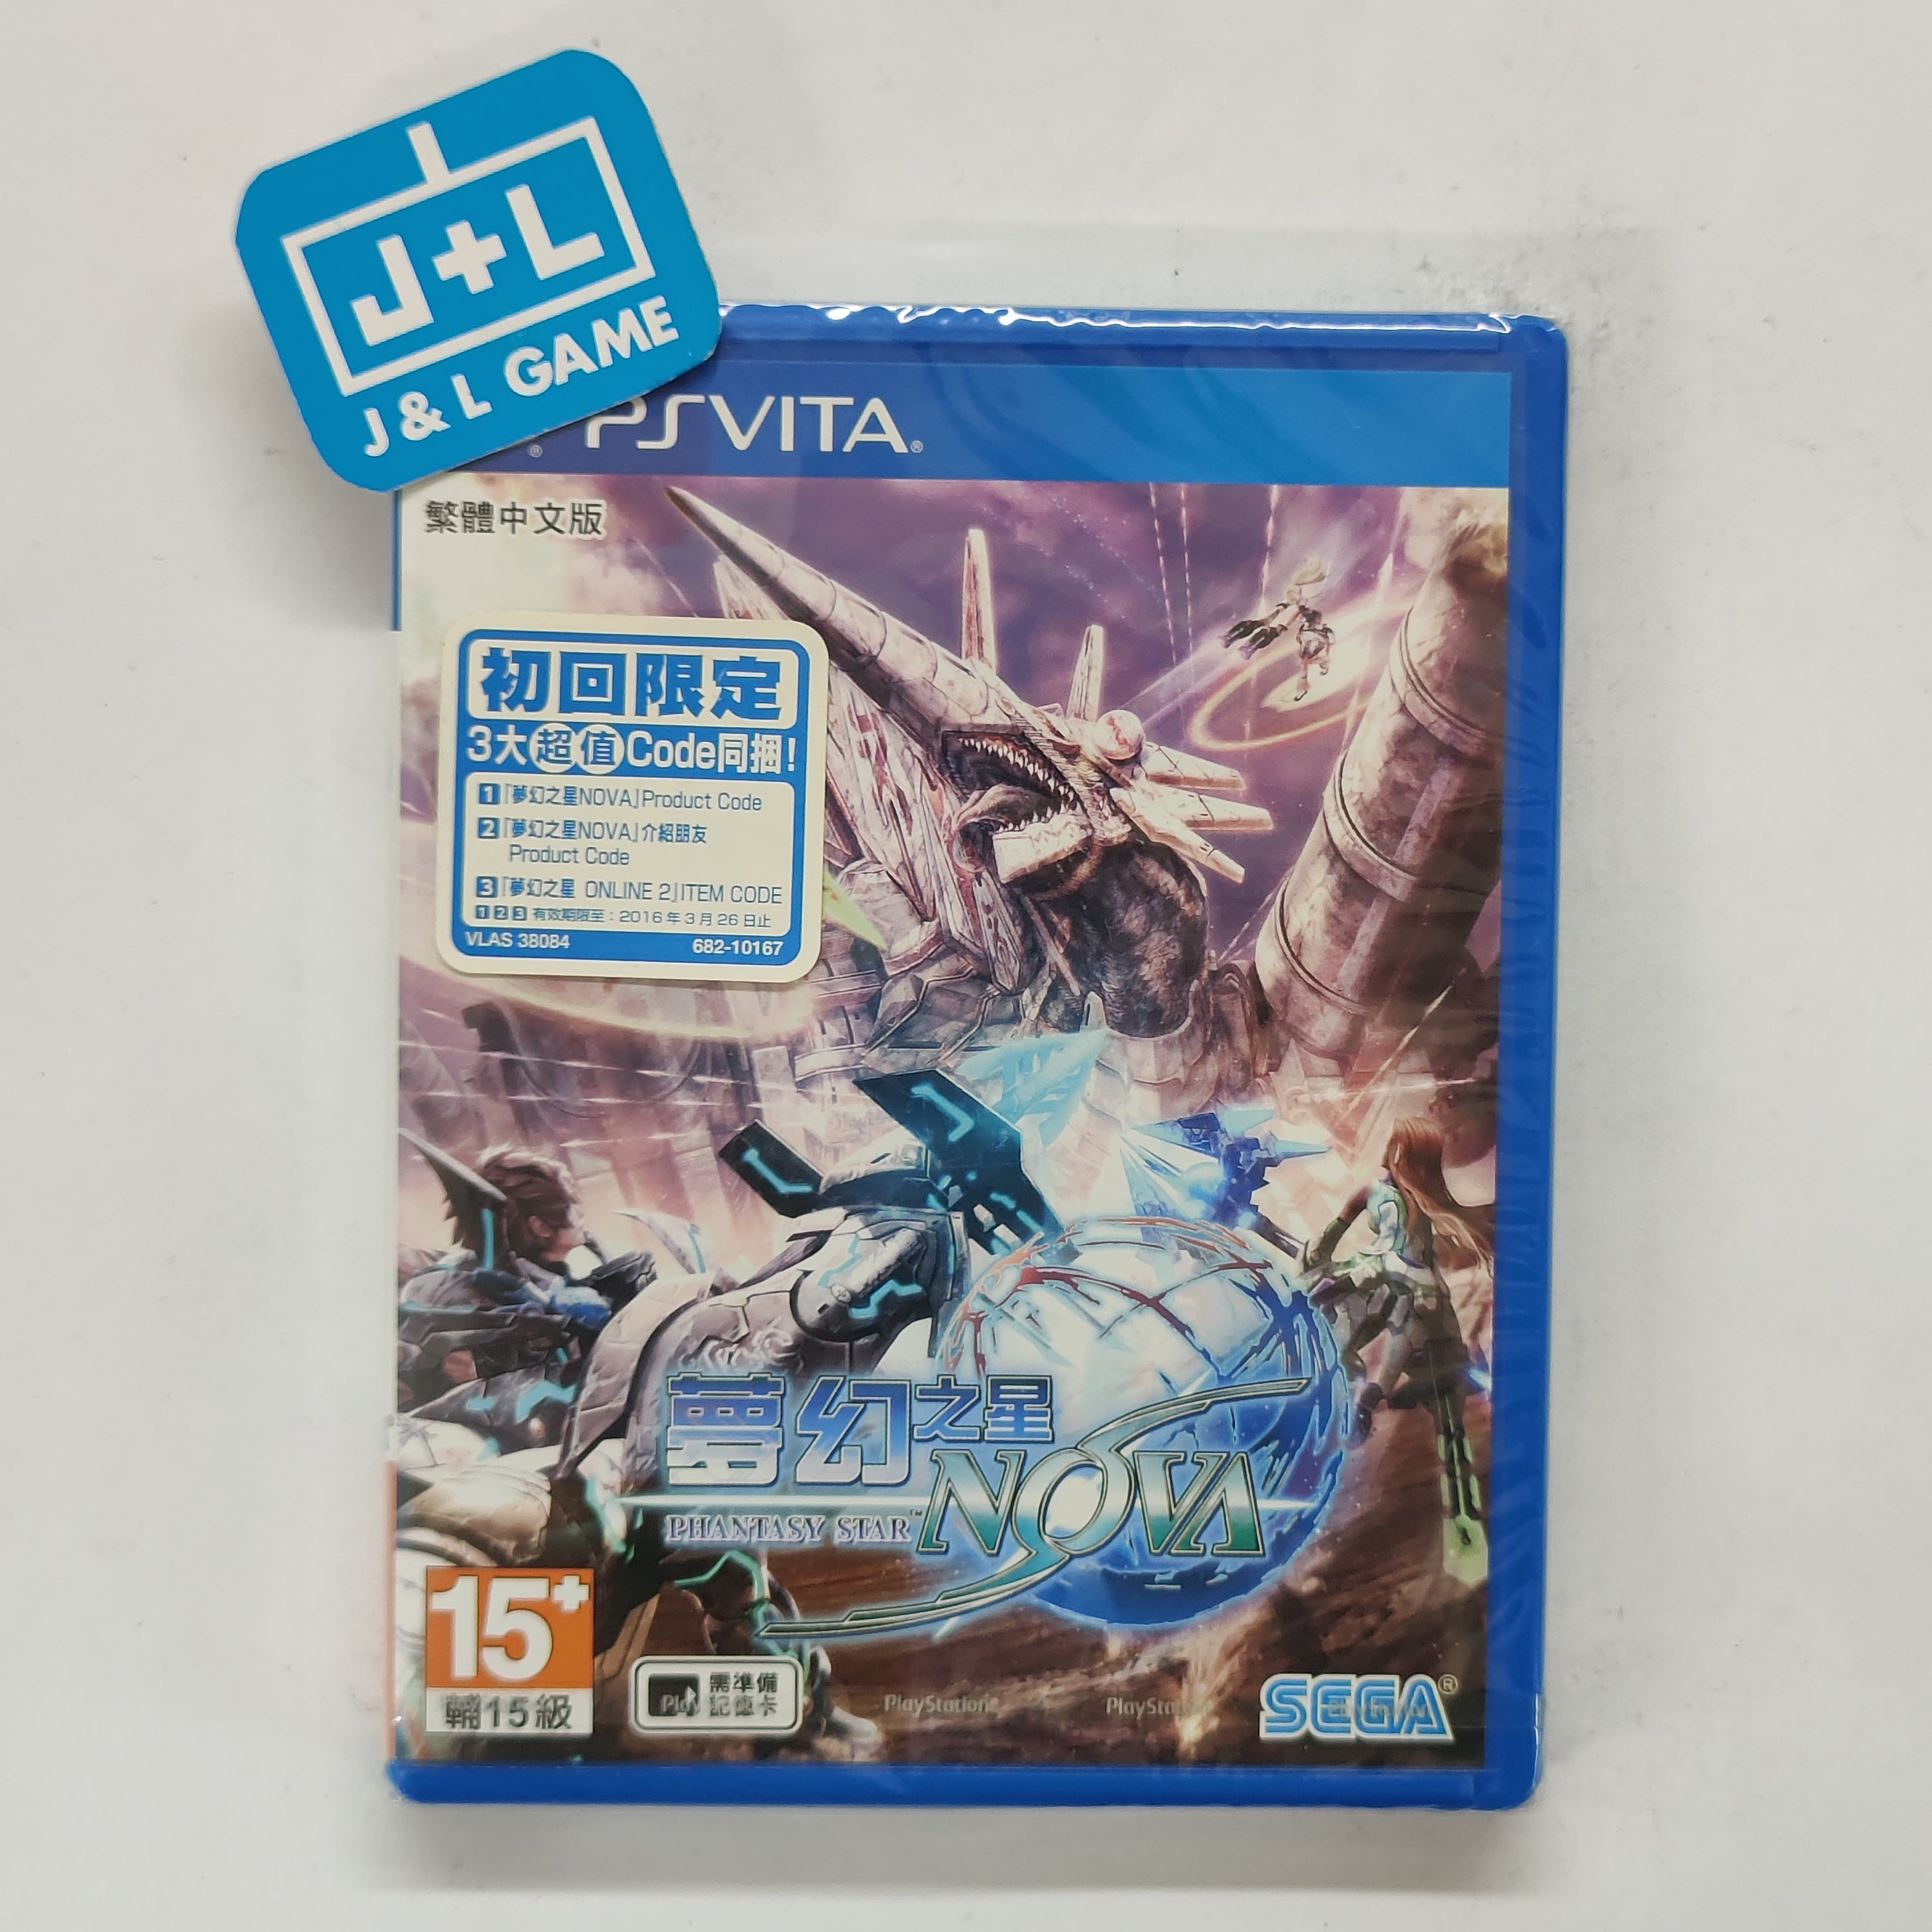 Phantasy Star Nova (Chinese Sub) - (PSV) PlayStation Vita (Asia Import) Video Games Sega   